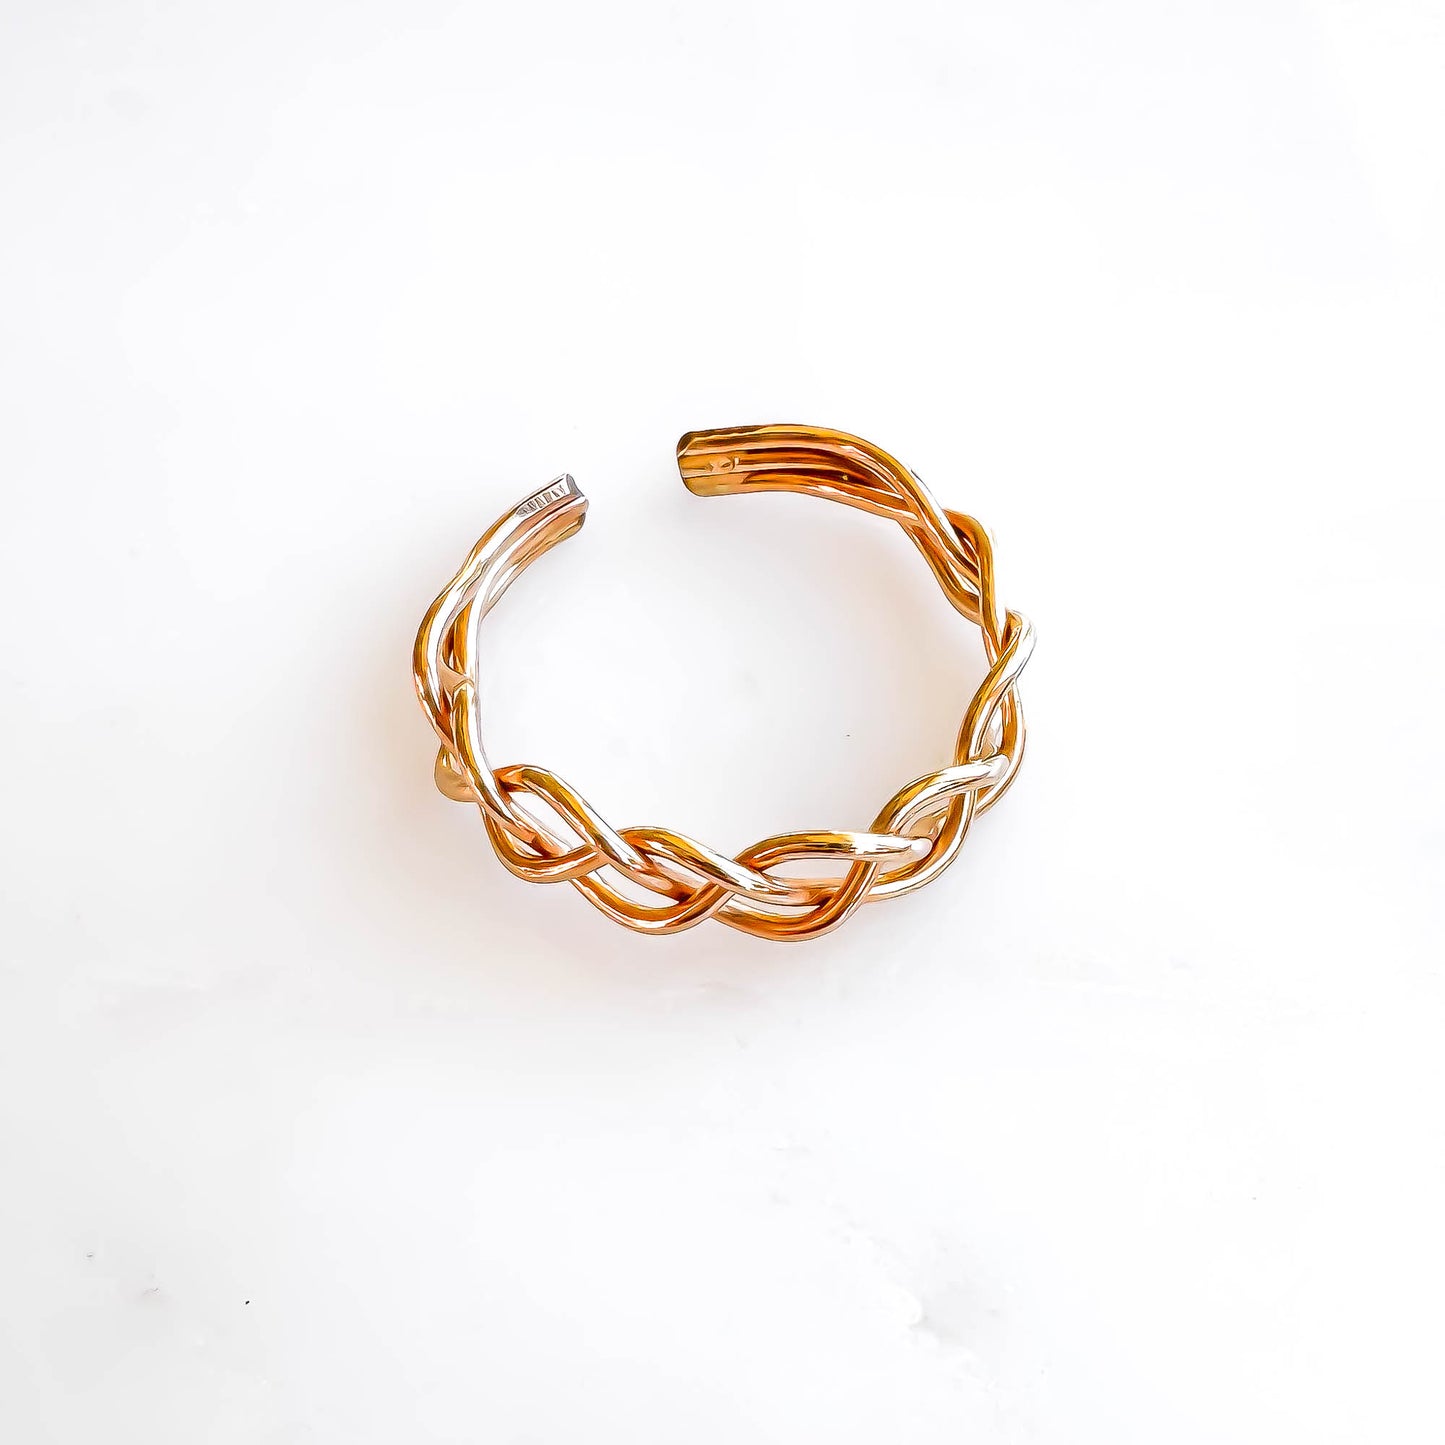 Braid Toe Ring, 14K Gold Filled